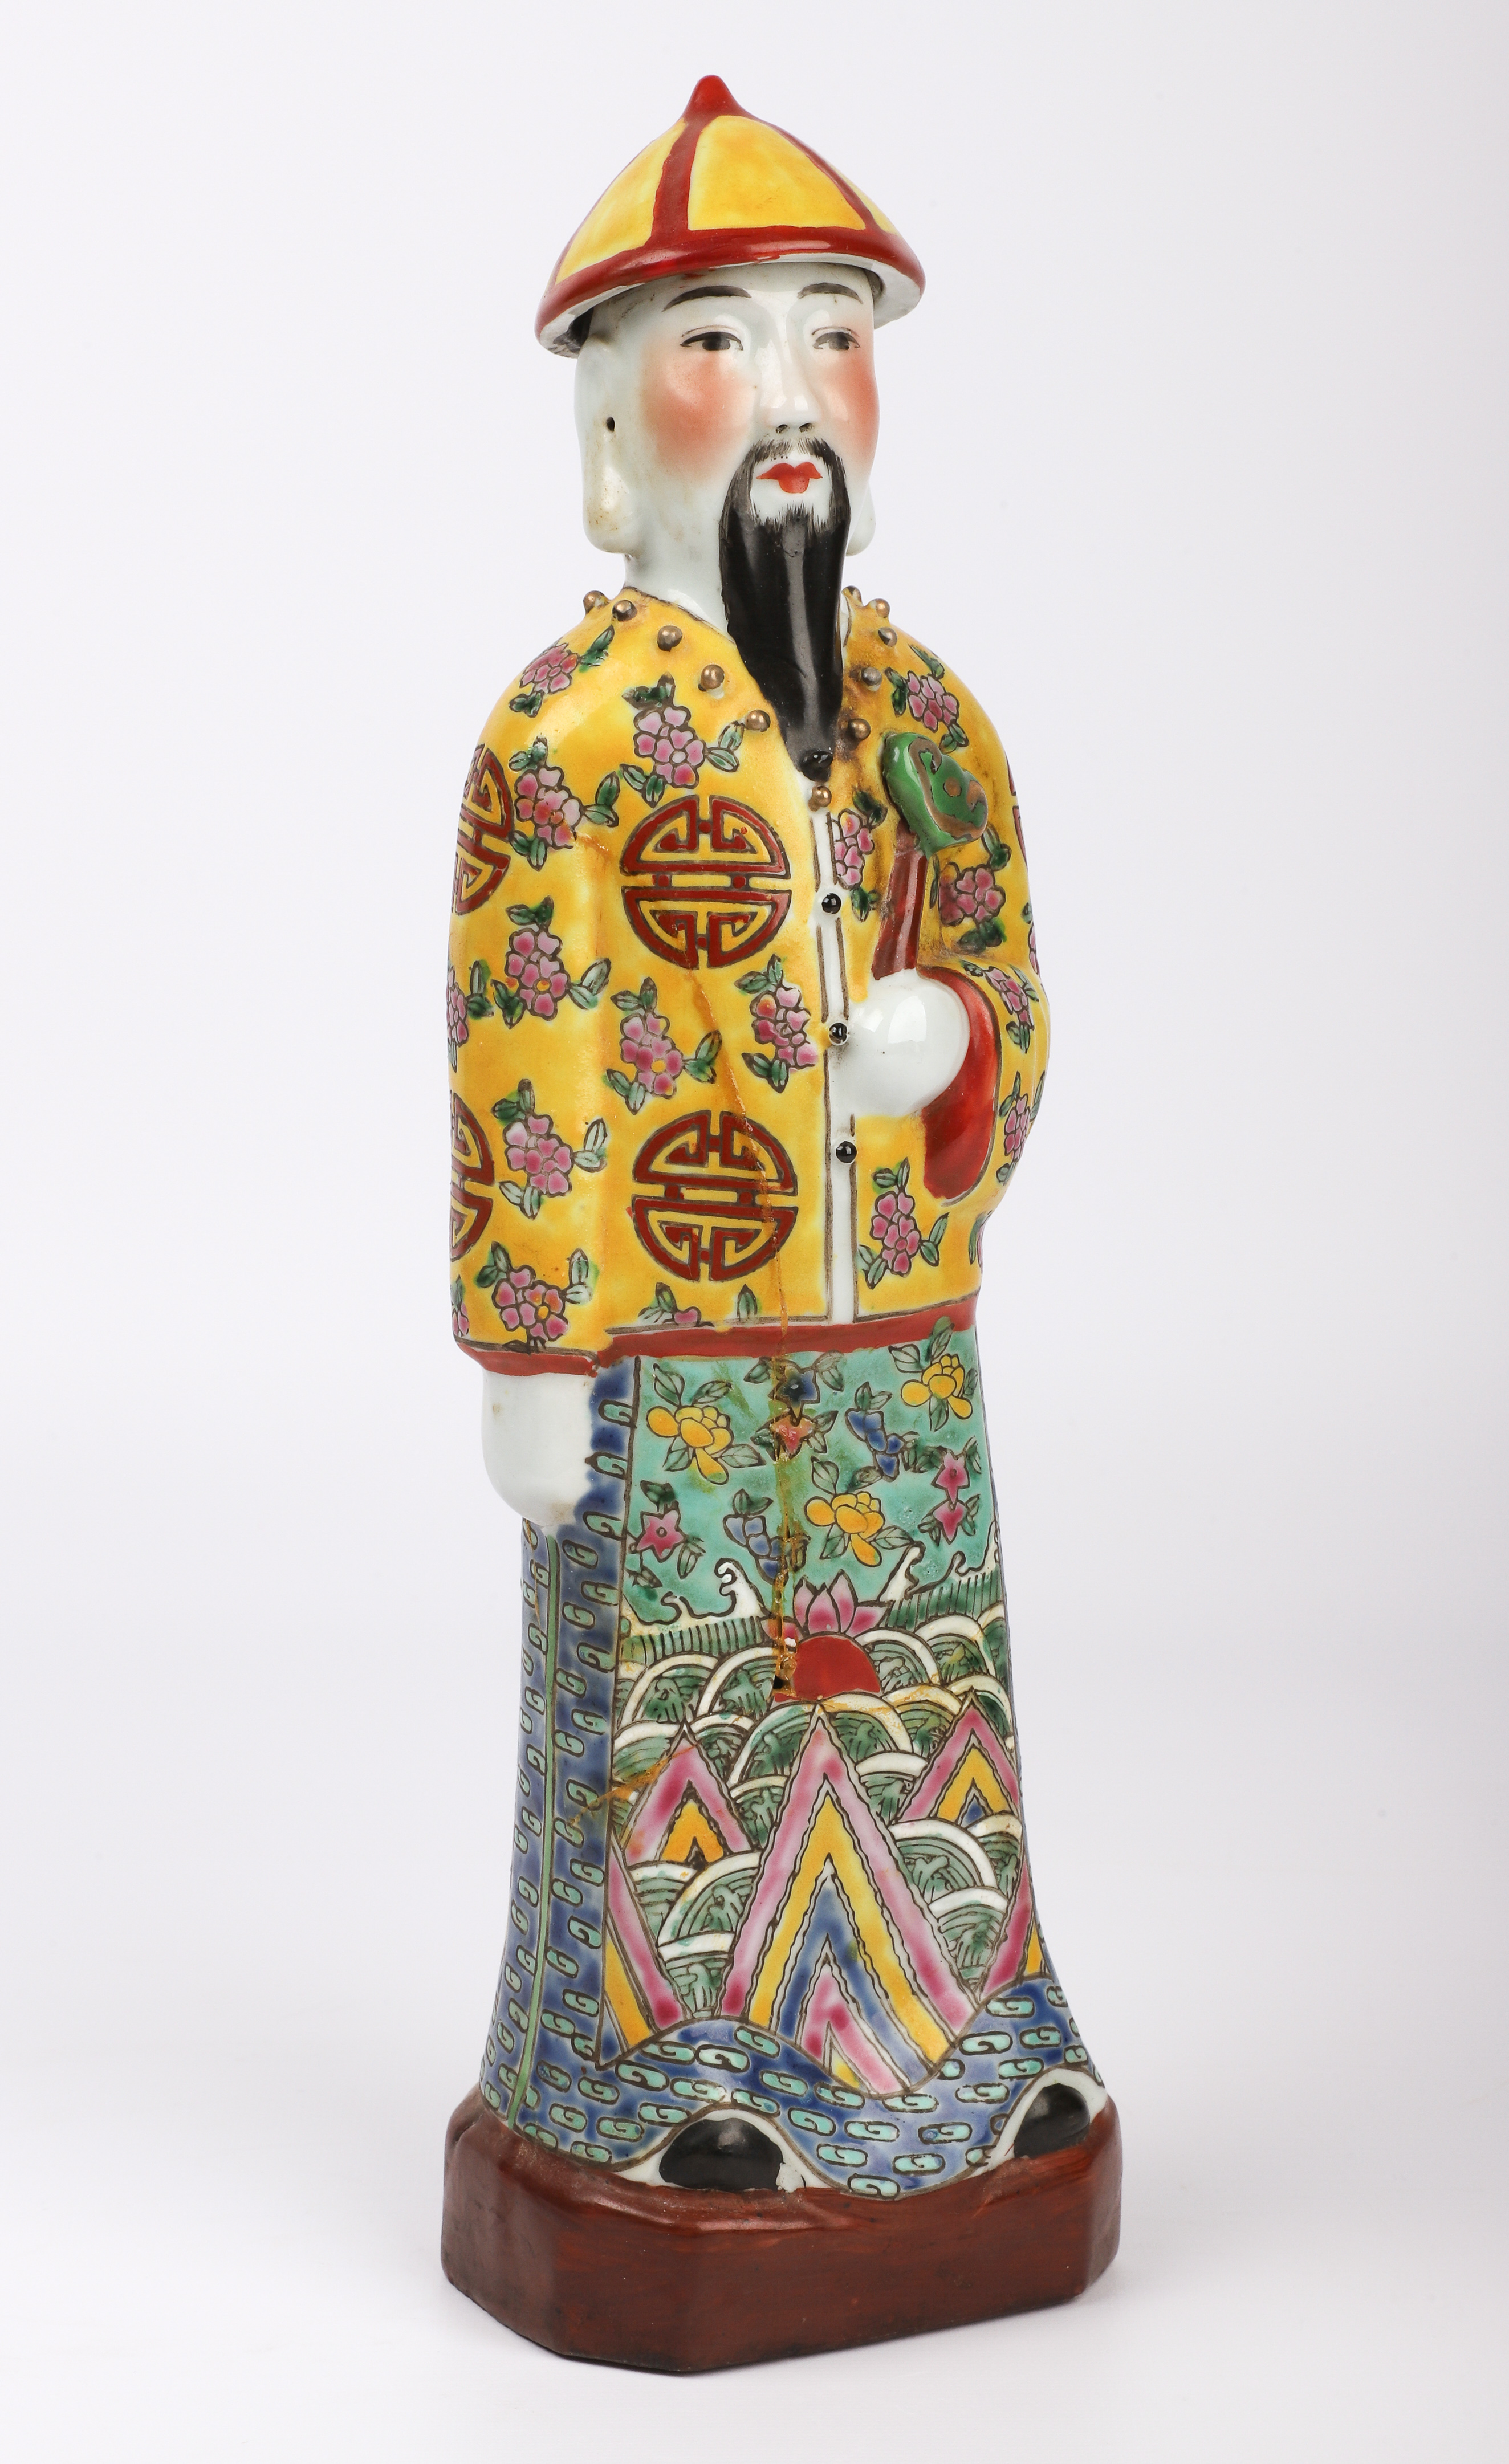 Chinese porcelain figurine man 3b15f6